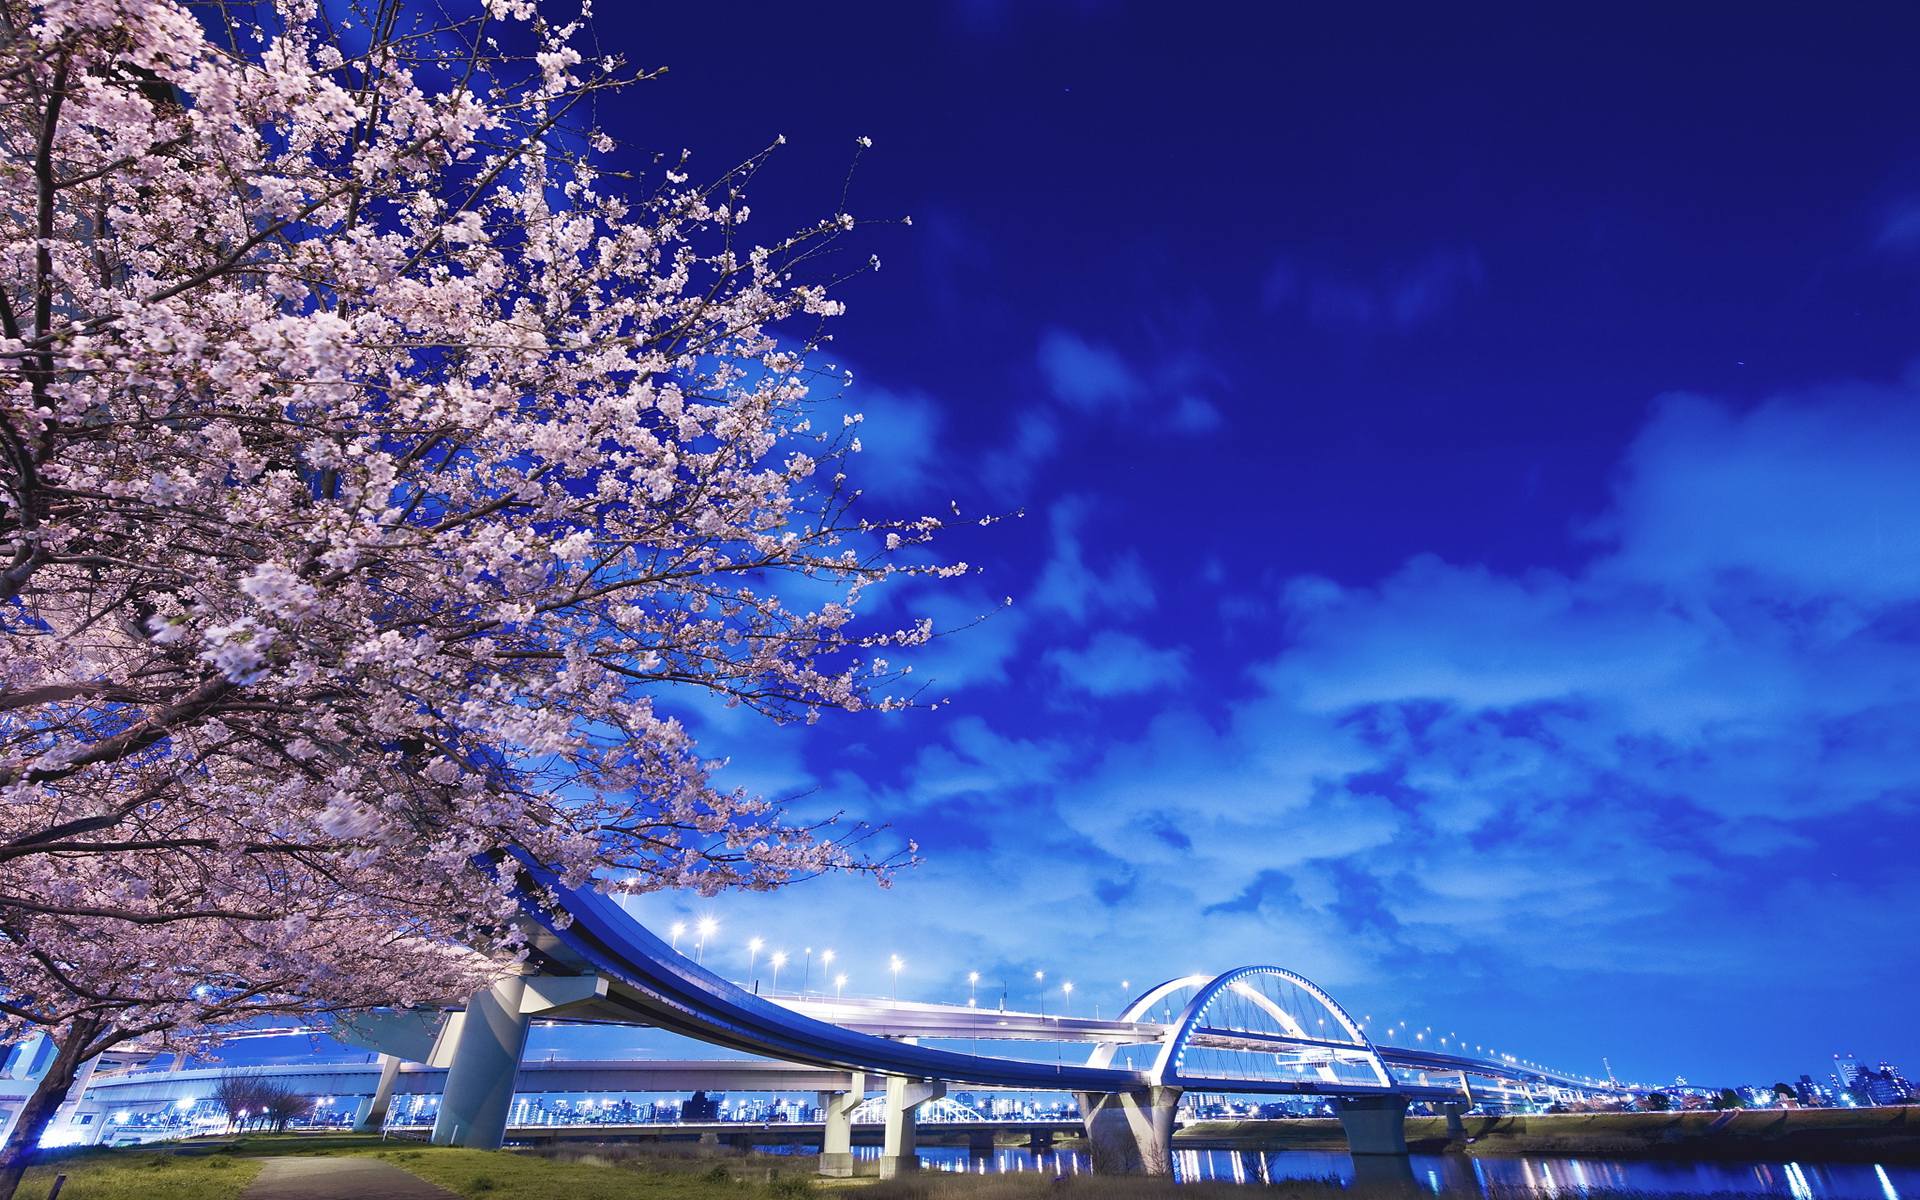 Cherry blossoms, Japan Desktop Wallpaper FREE on Latoro.com